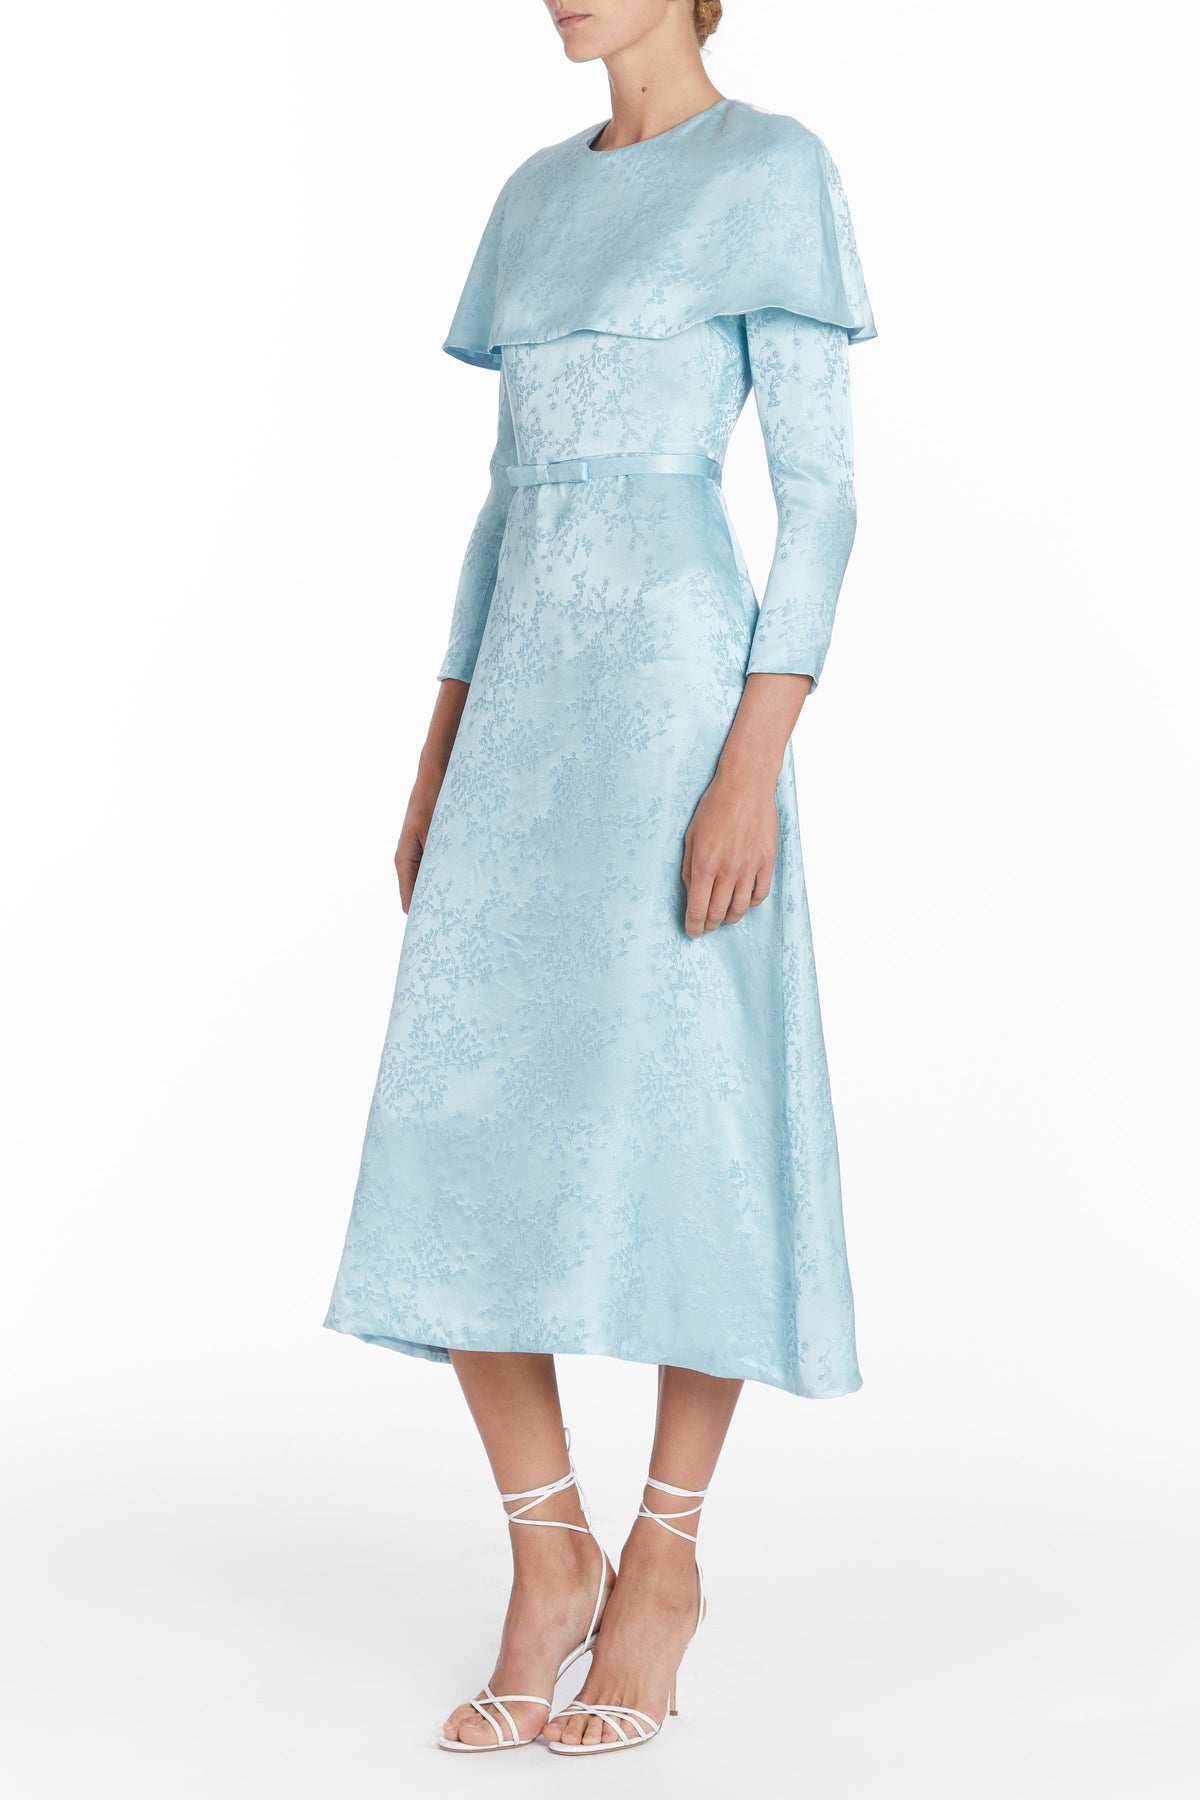 Hadley Light Blue Capelet Long Sleeve Dress